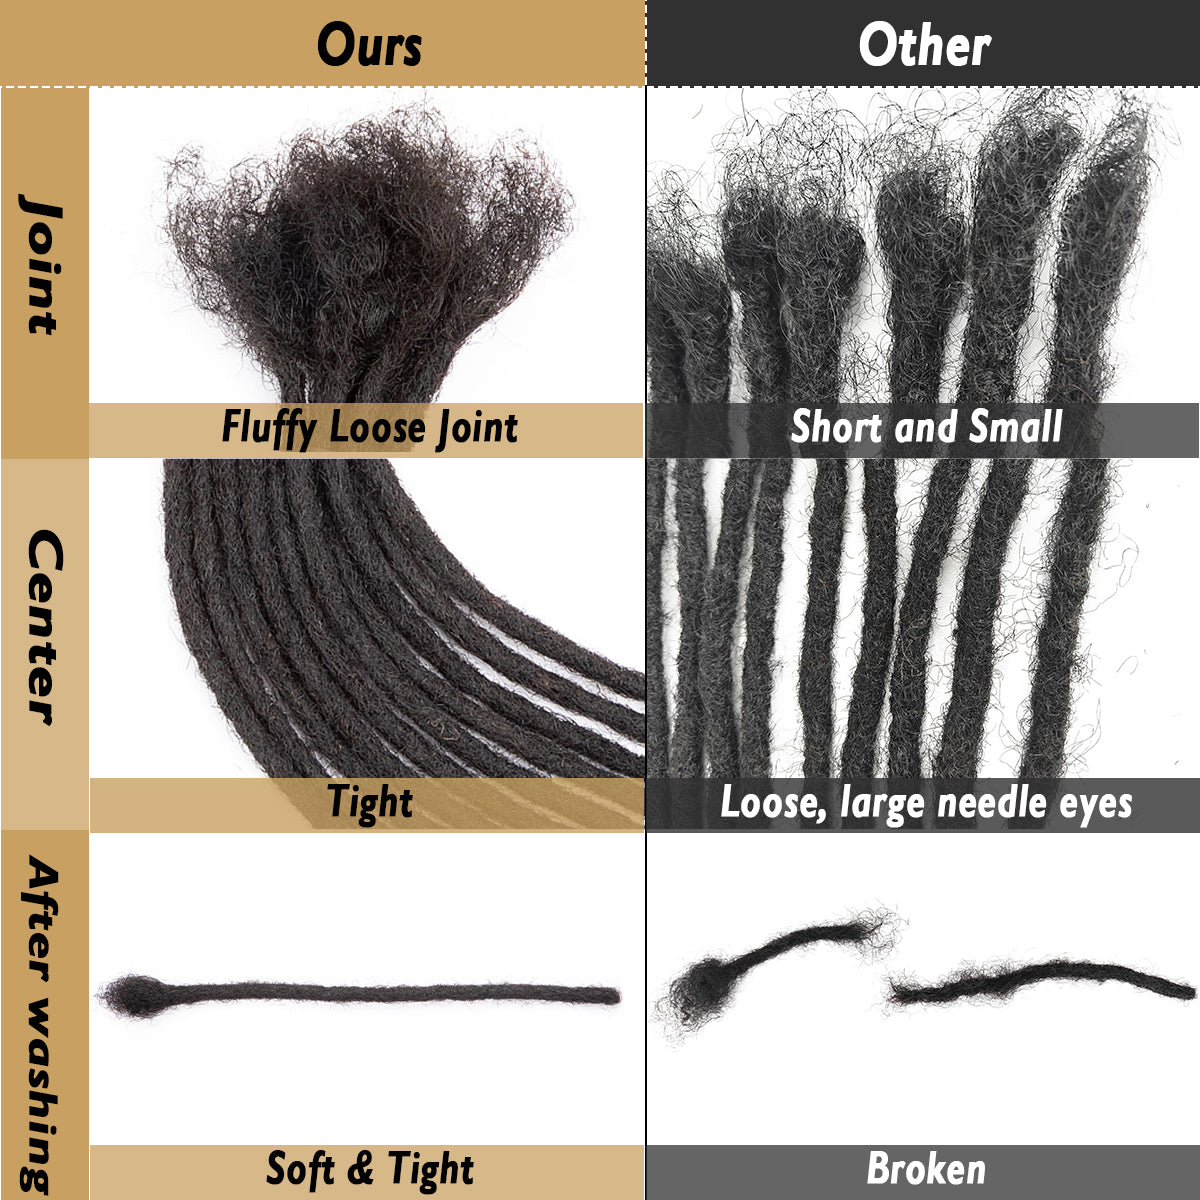 #Green Dreads Extensions  Human Hair Dreadlocks For Men and Women 8 Inch Locs Hair